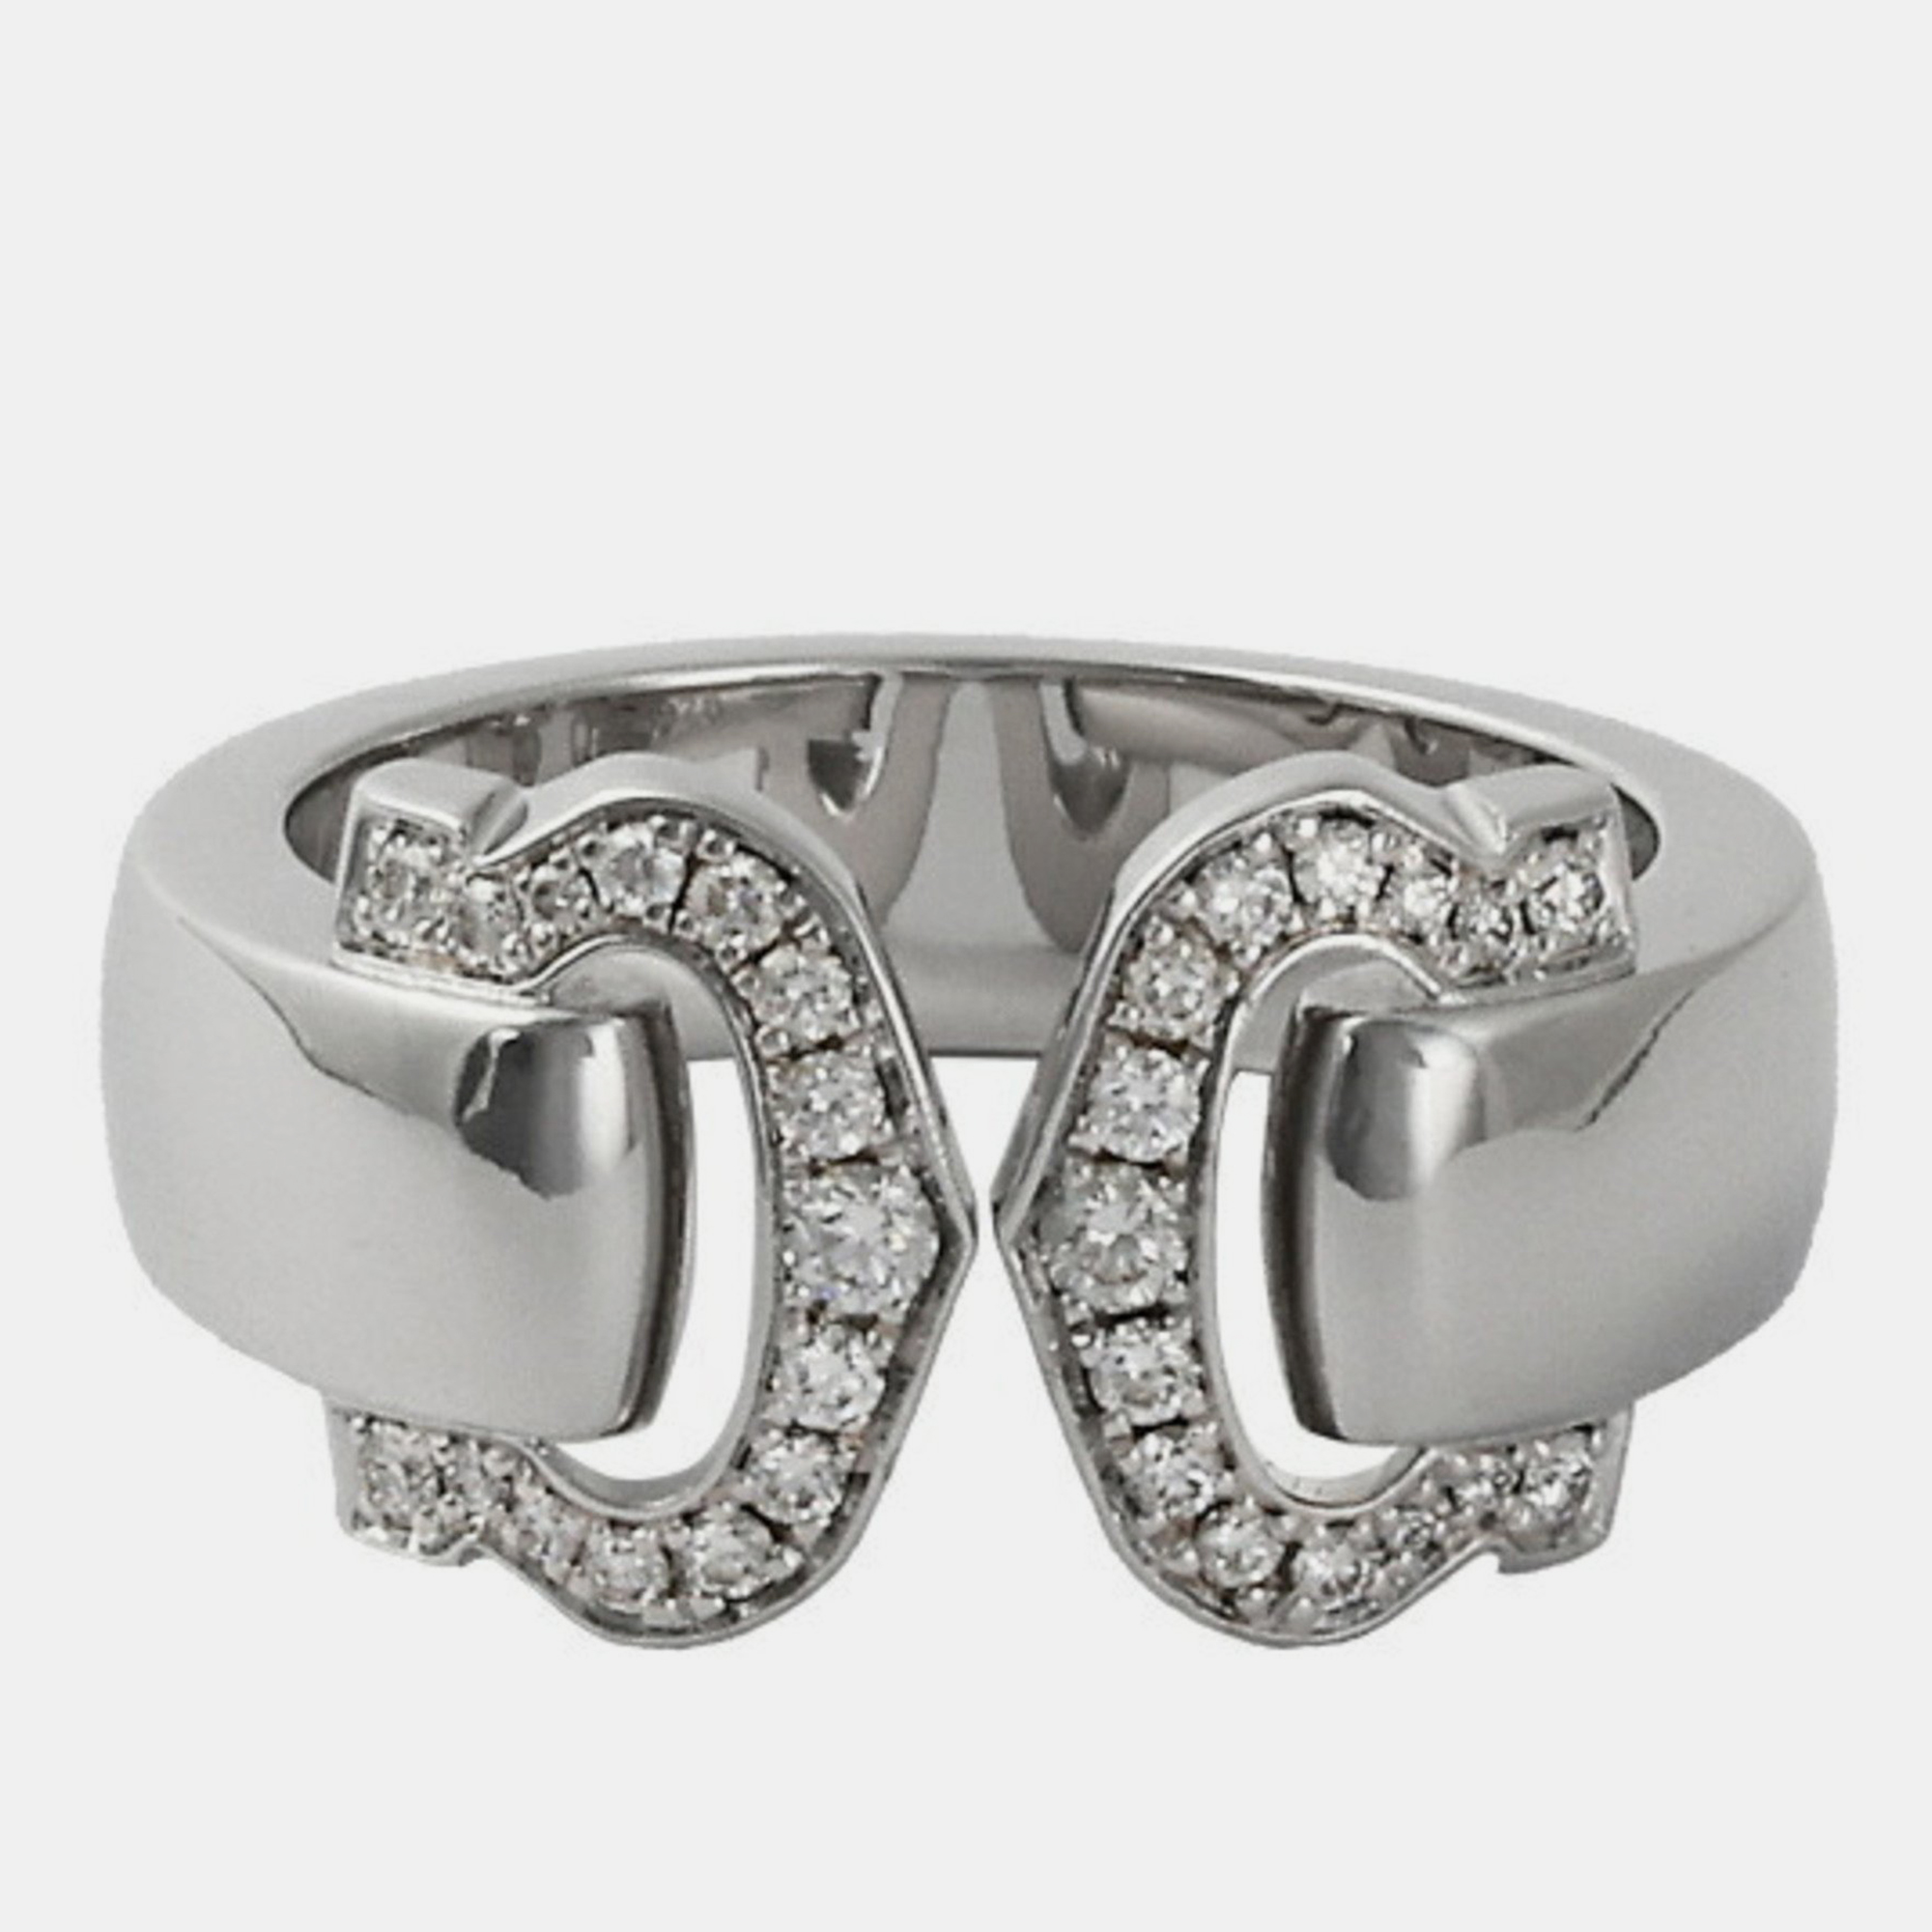 Cartier C De Cartier 18K White Gold Diamond Ring EU 48